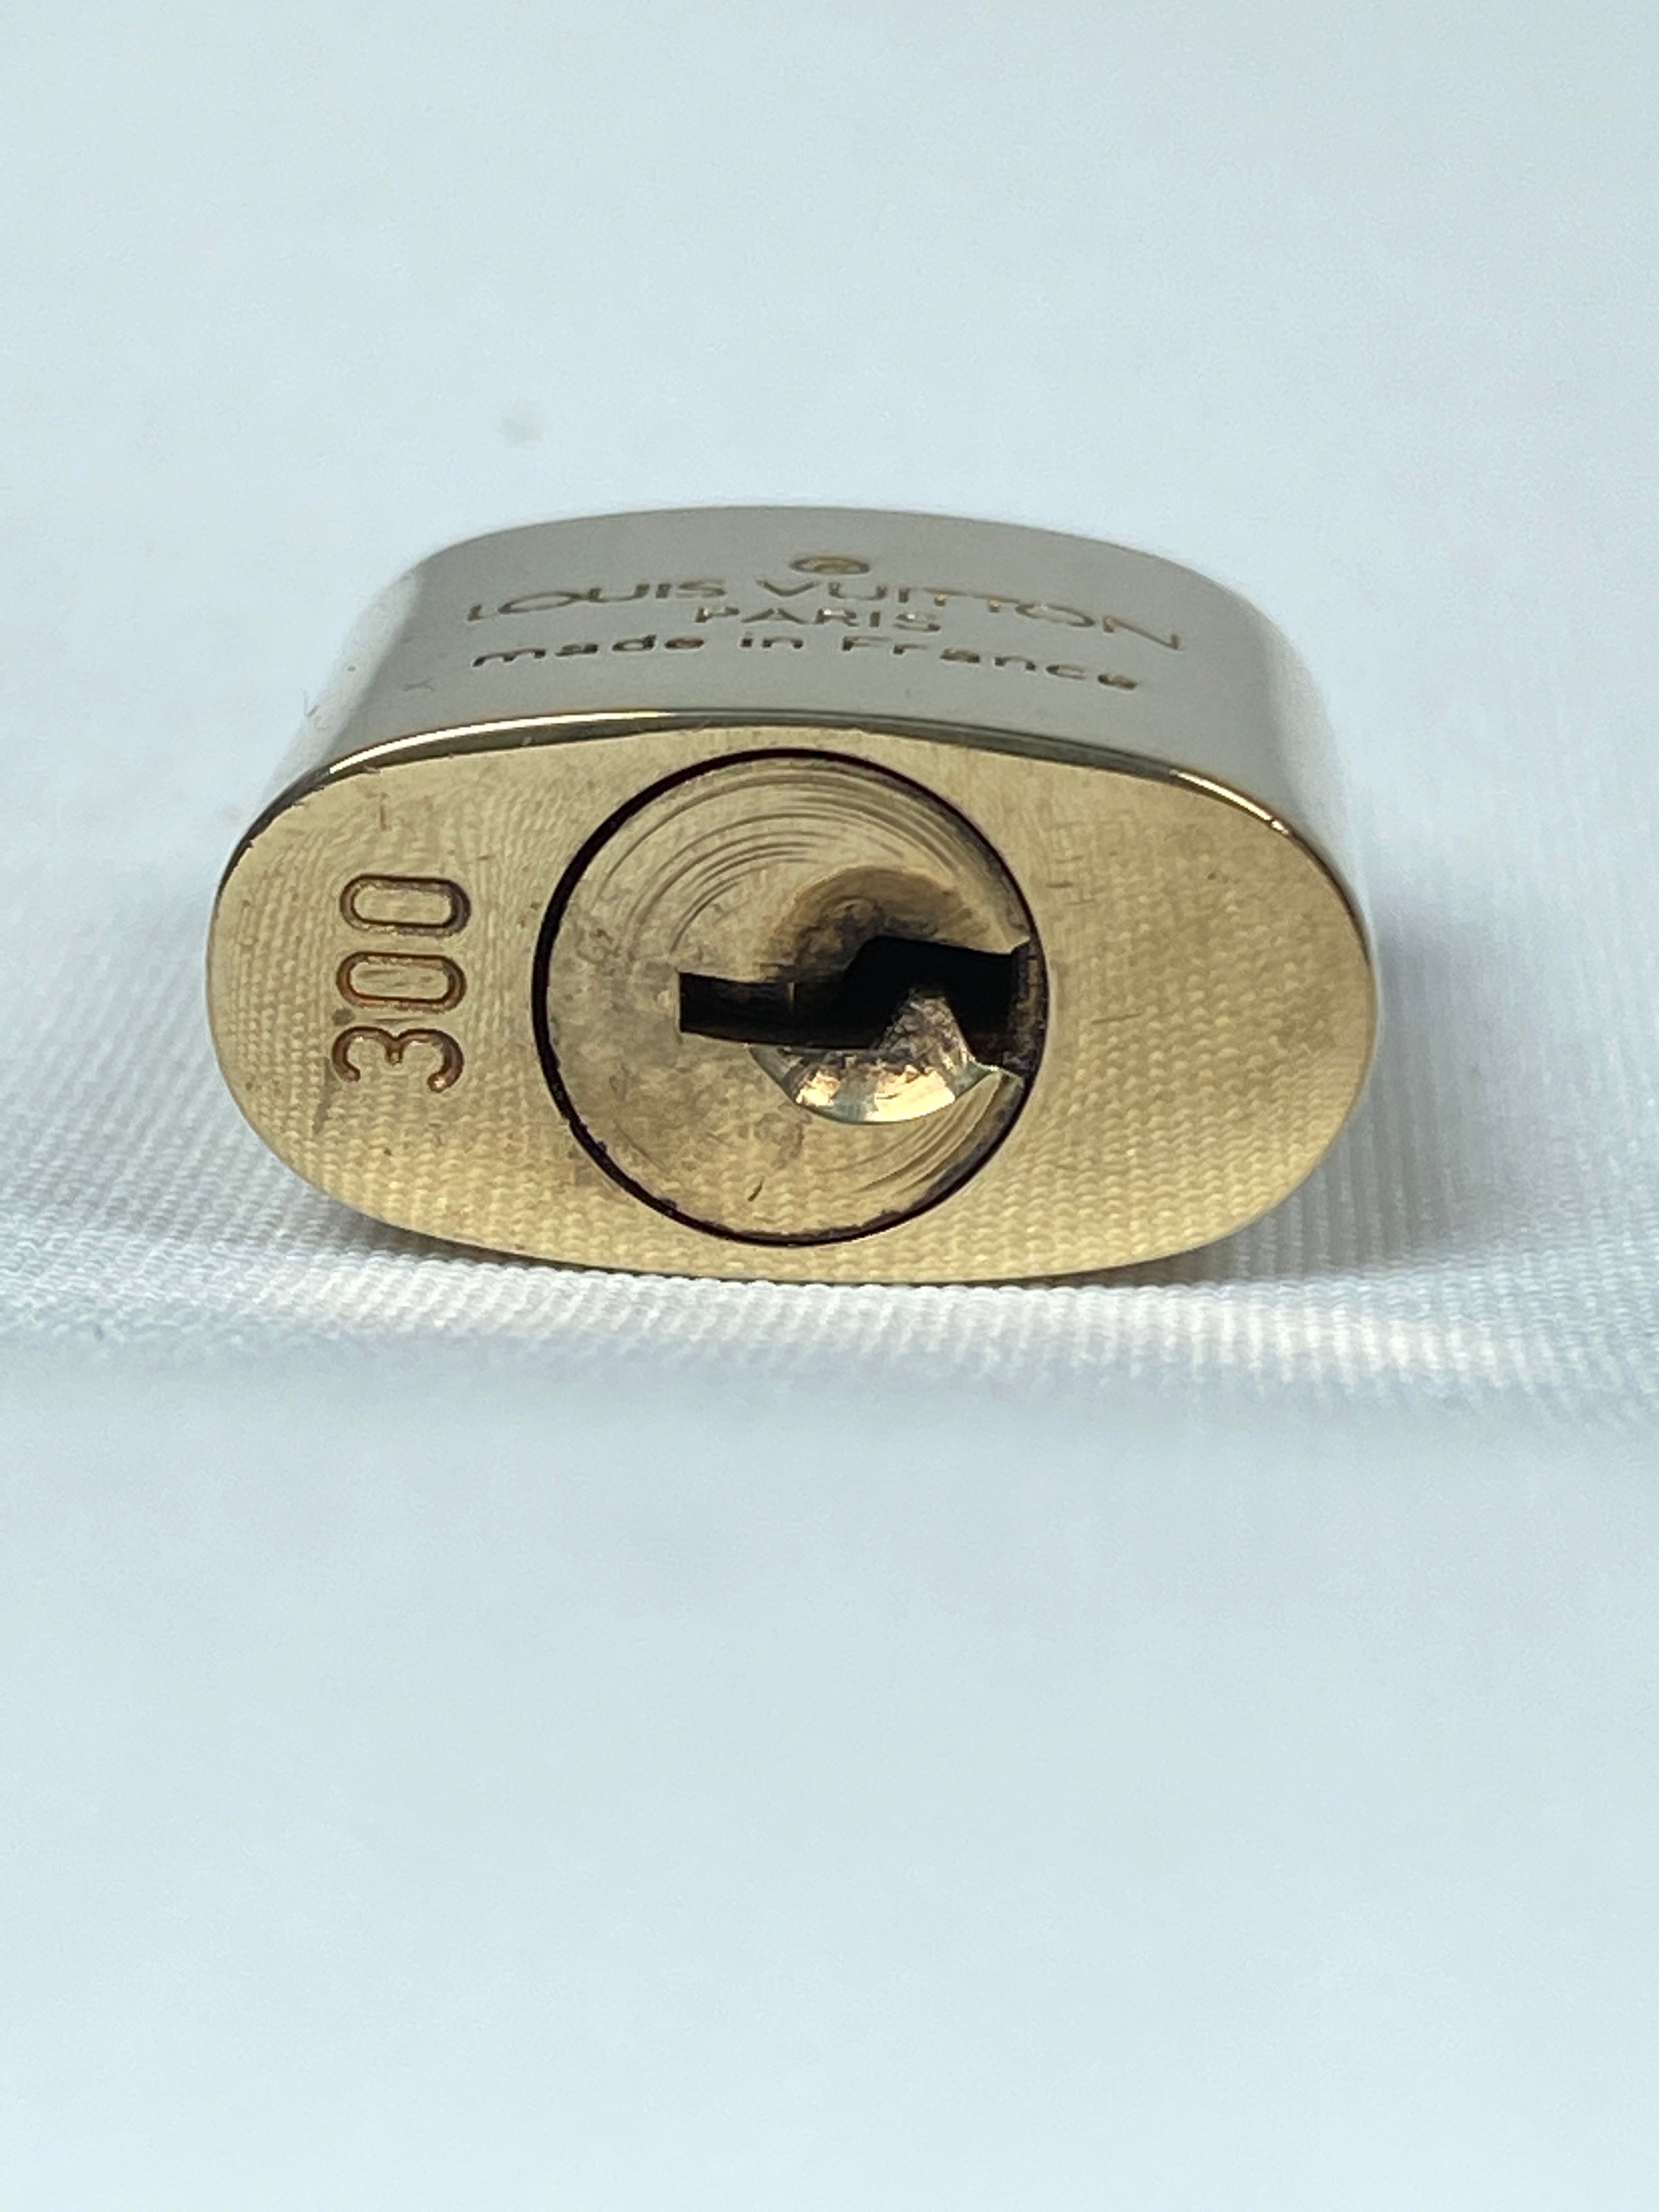 Authentic Louis Vuitton Gold Brass Lock and Key Set 319 -  Australia